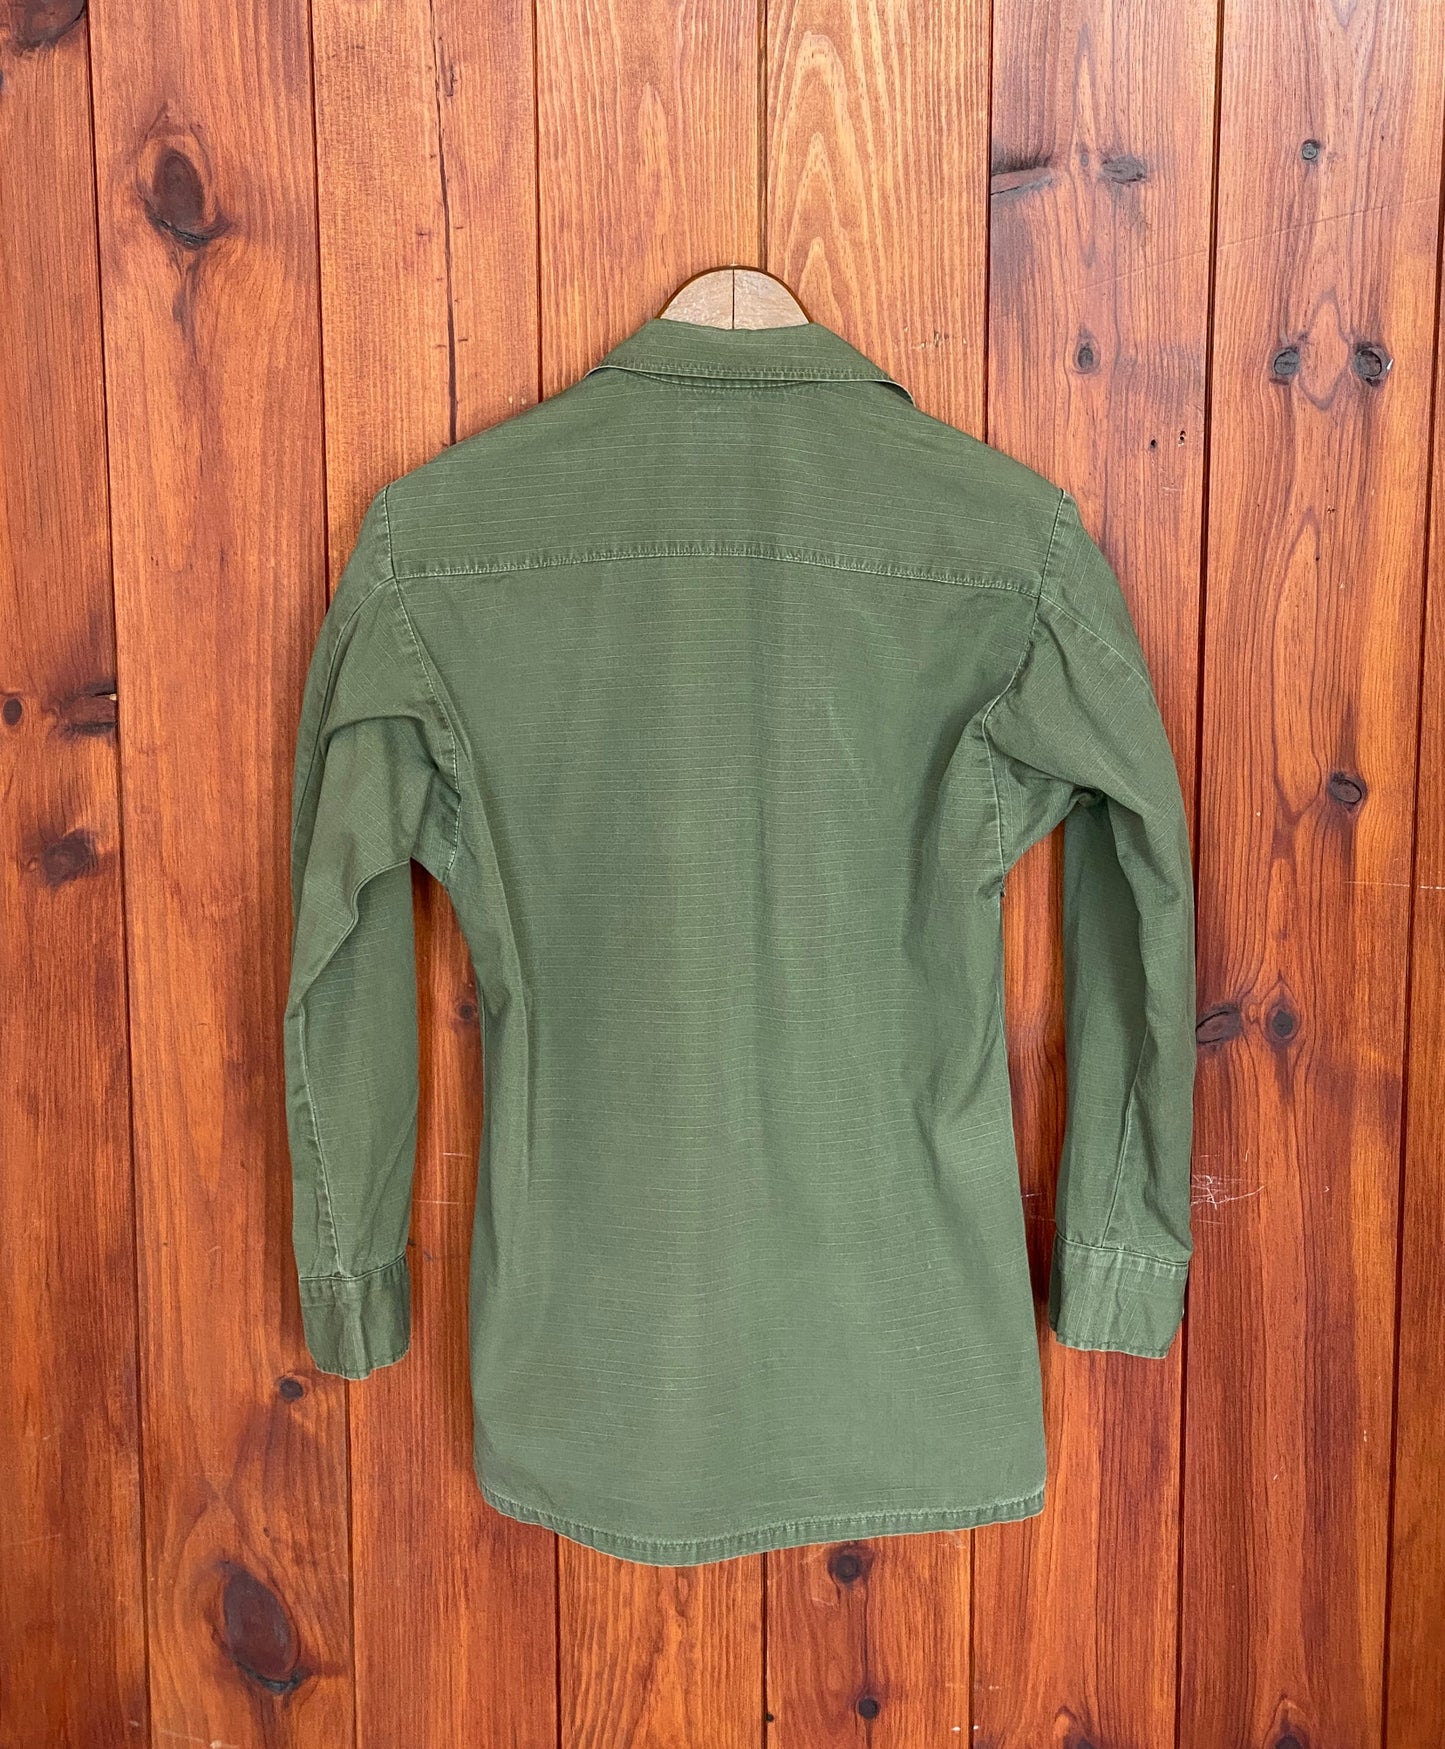 X Small Short. Authentic 1970 US Army Vintage tropical Vietnam  jungle jacket.